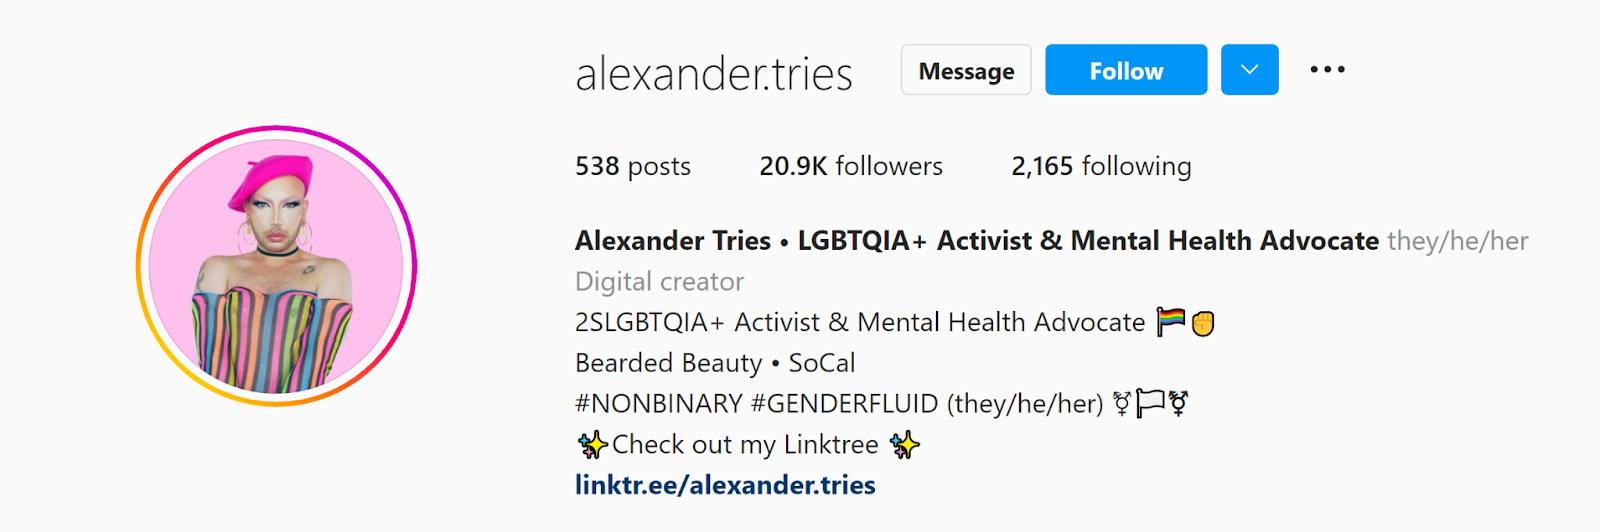 Alexander Tries: Their Story & Being a 2SLGBTQIA+ Activist & Mental Health Advocate